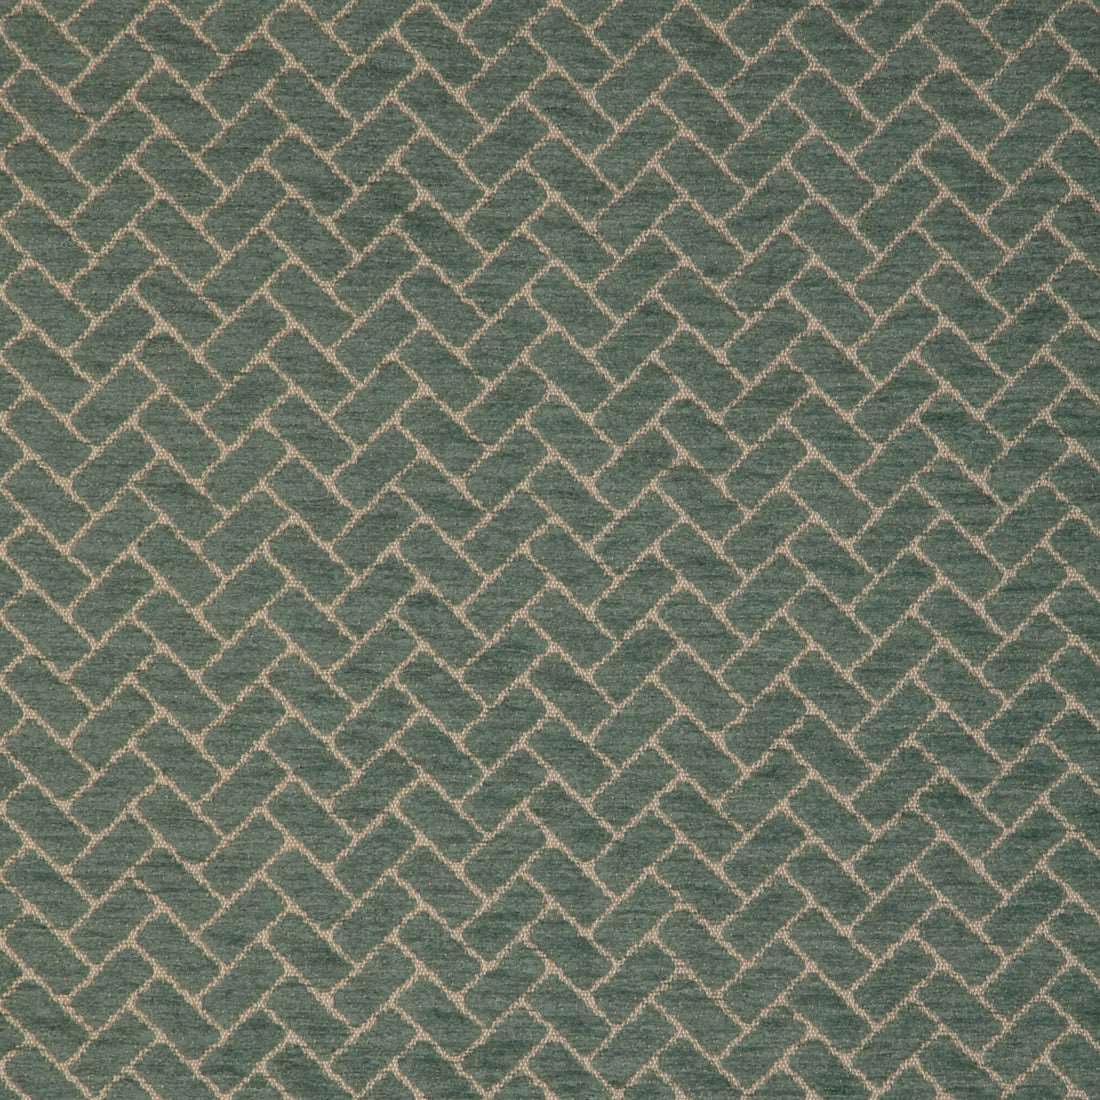 Kravet Smart fabric in 37003-3 color - pattern 37003.3.0 - by Kravet Smart in the Pavilion collection